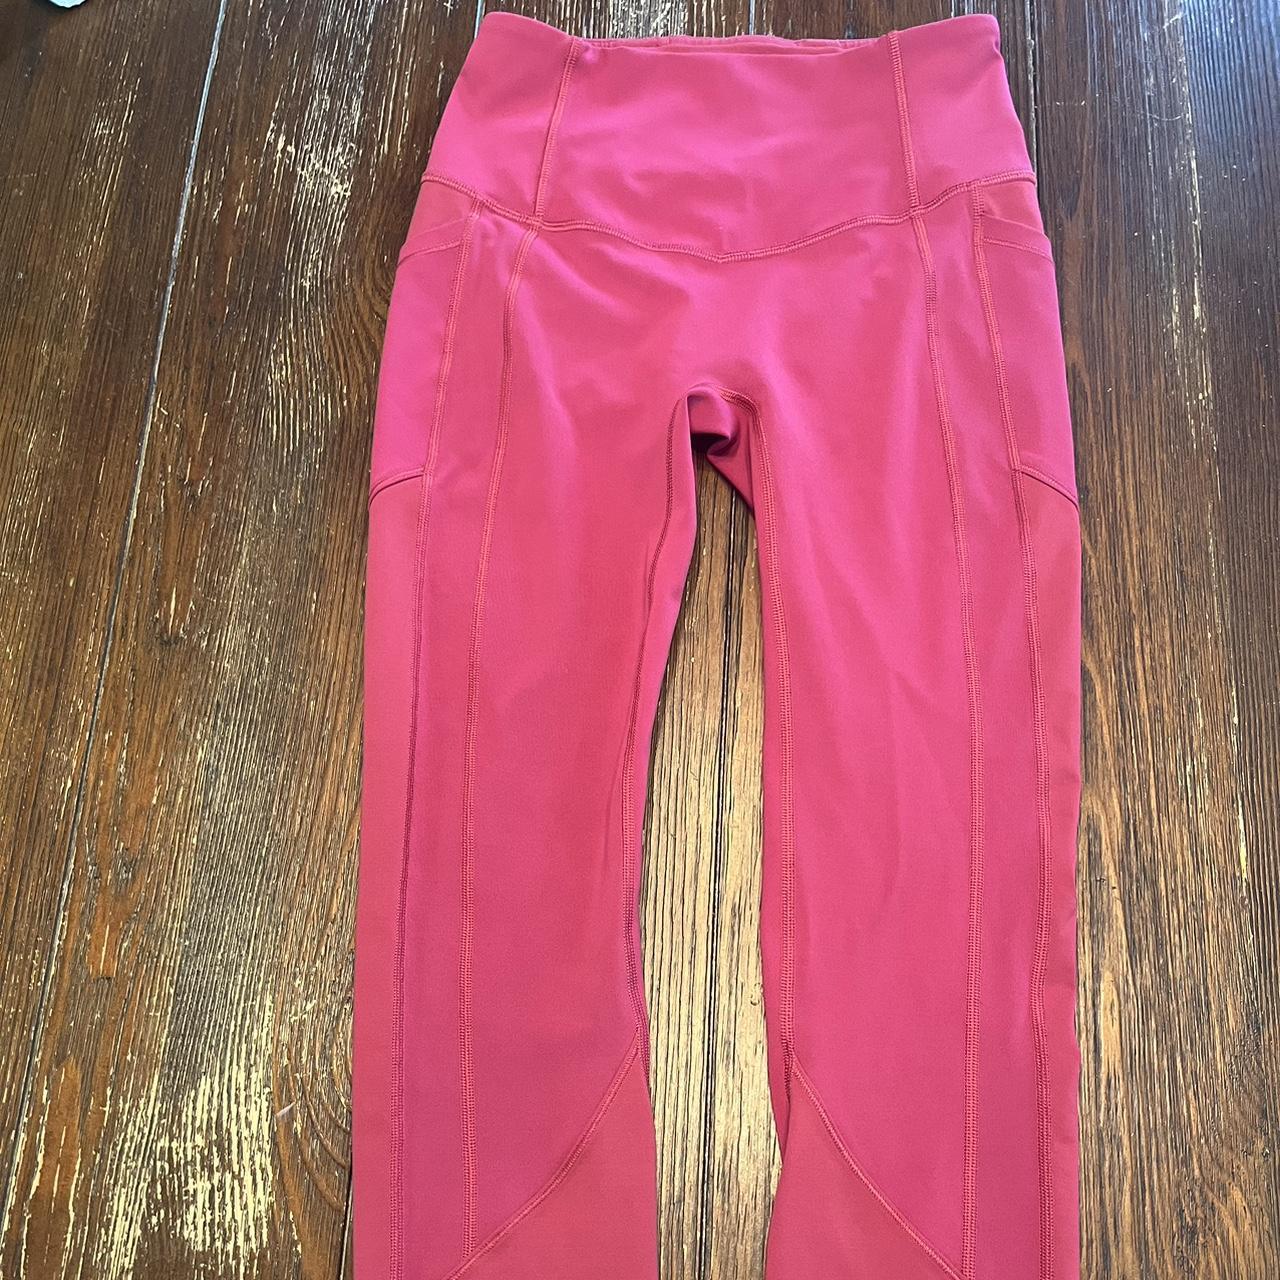 Lululemon size 4 pink leggings - Depop